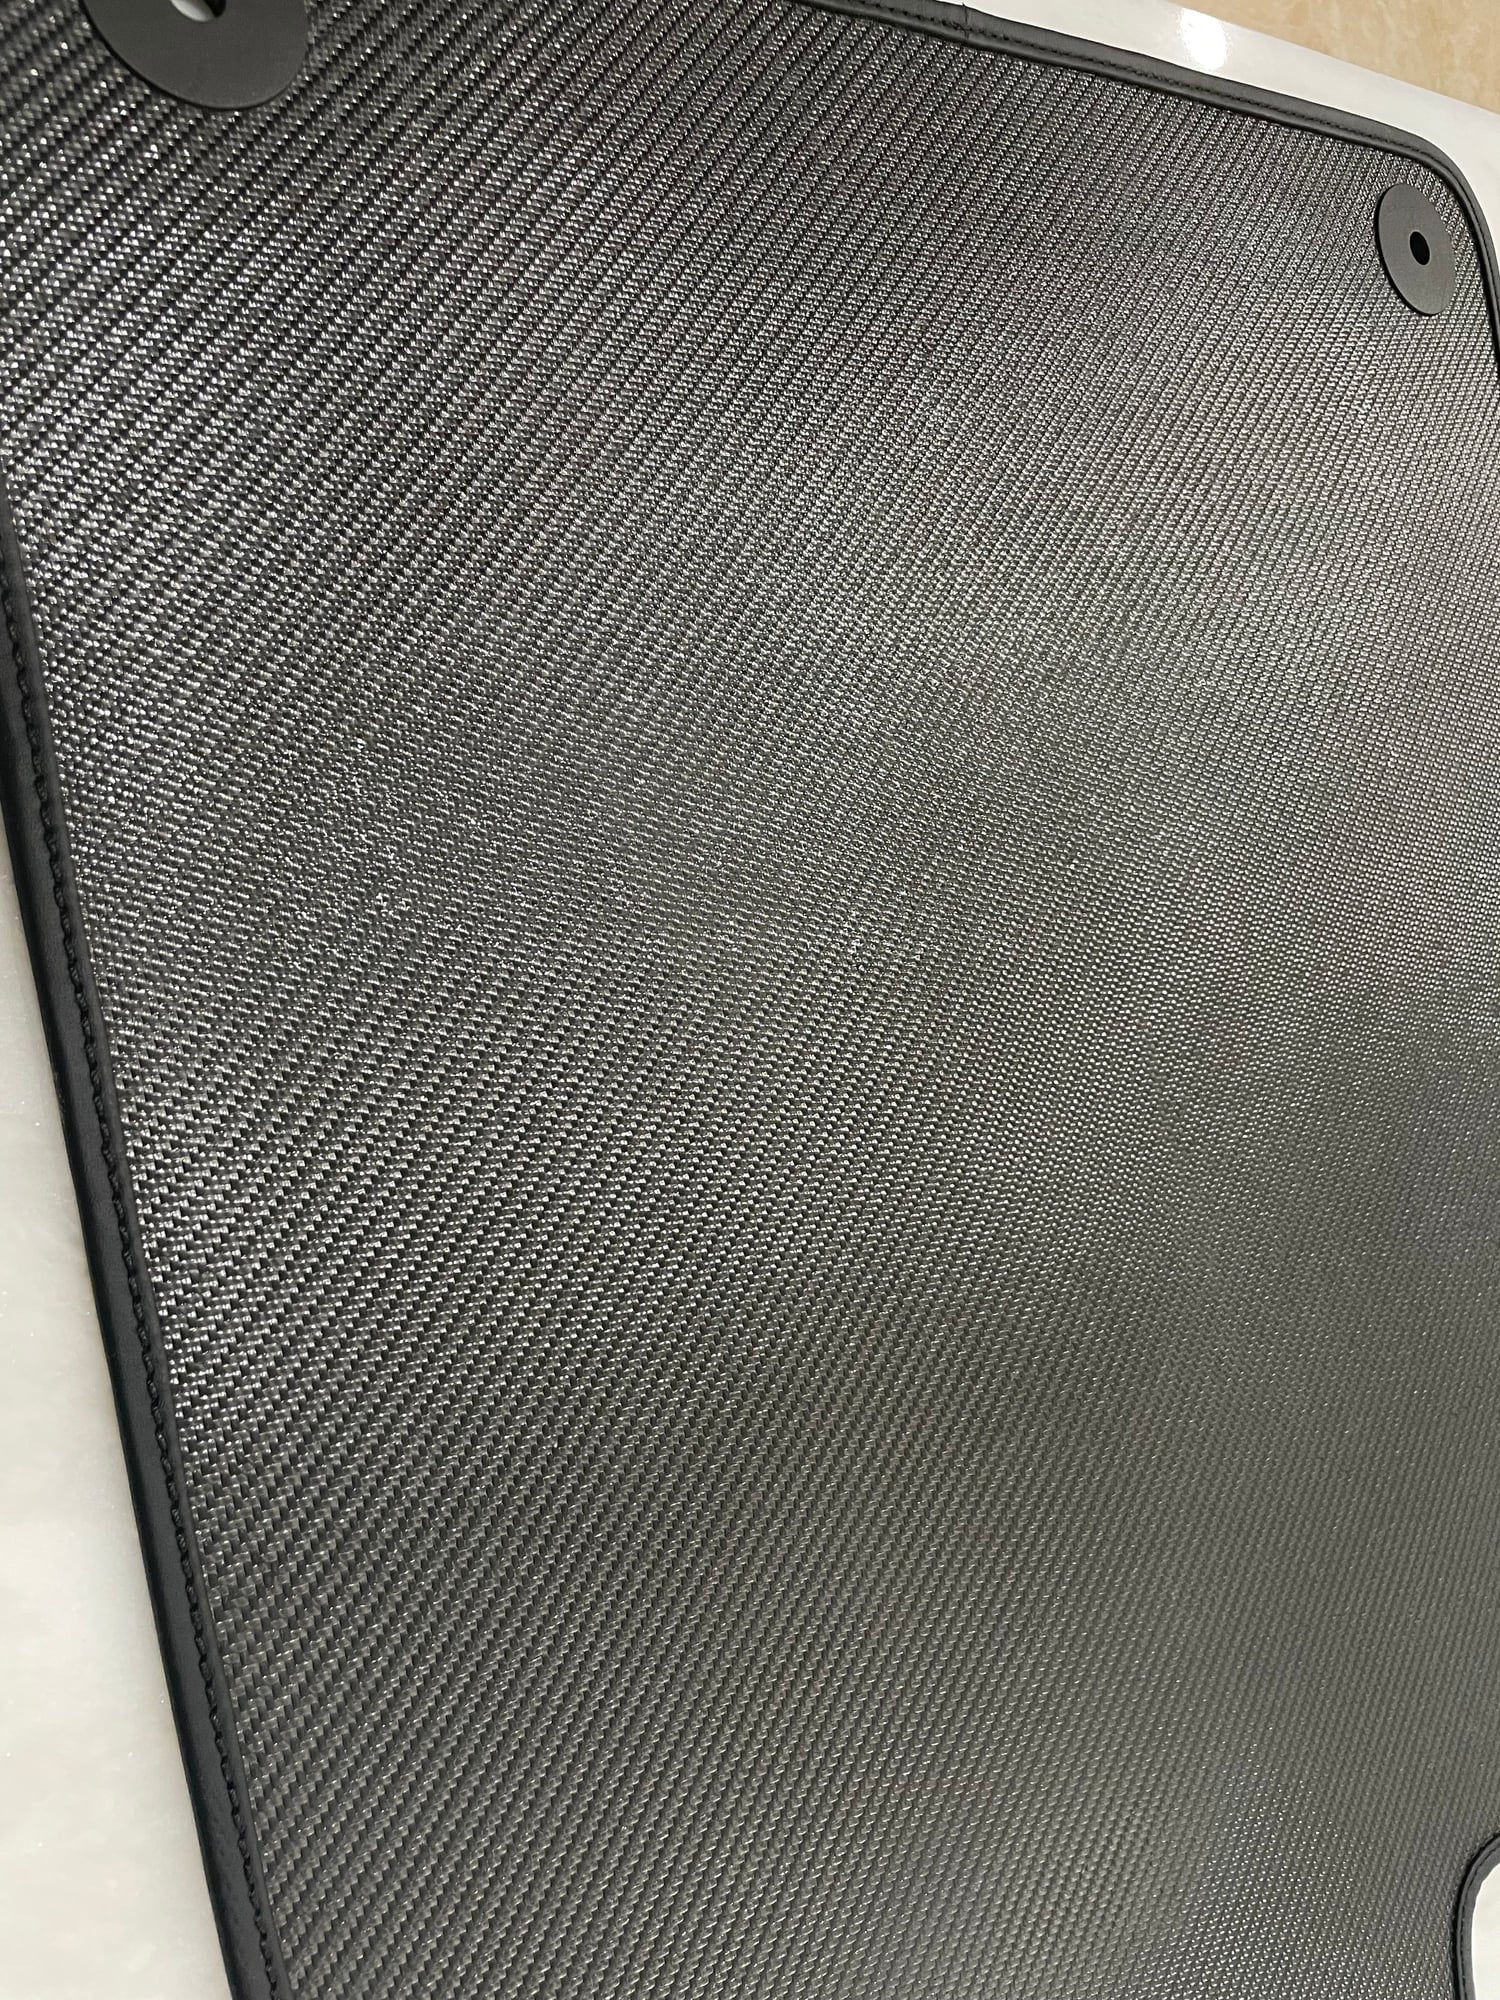 Accessories - OEM carbon fiber floor mats - Used - 2013 to 2019 Porsche 911 - Wellington, FL 33414, United States